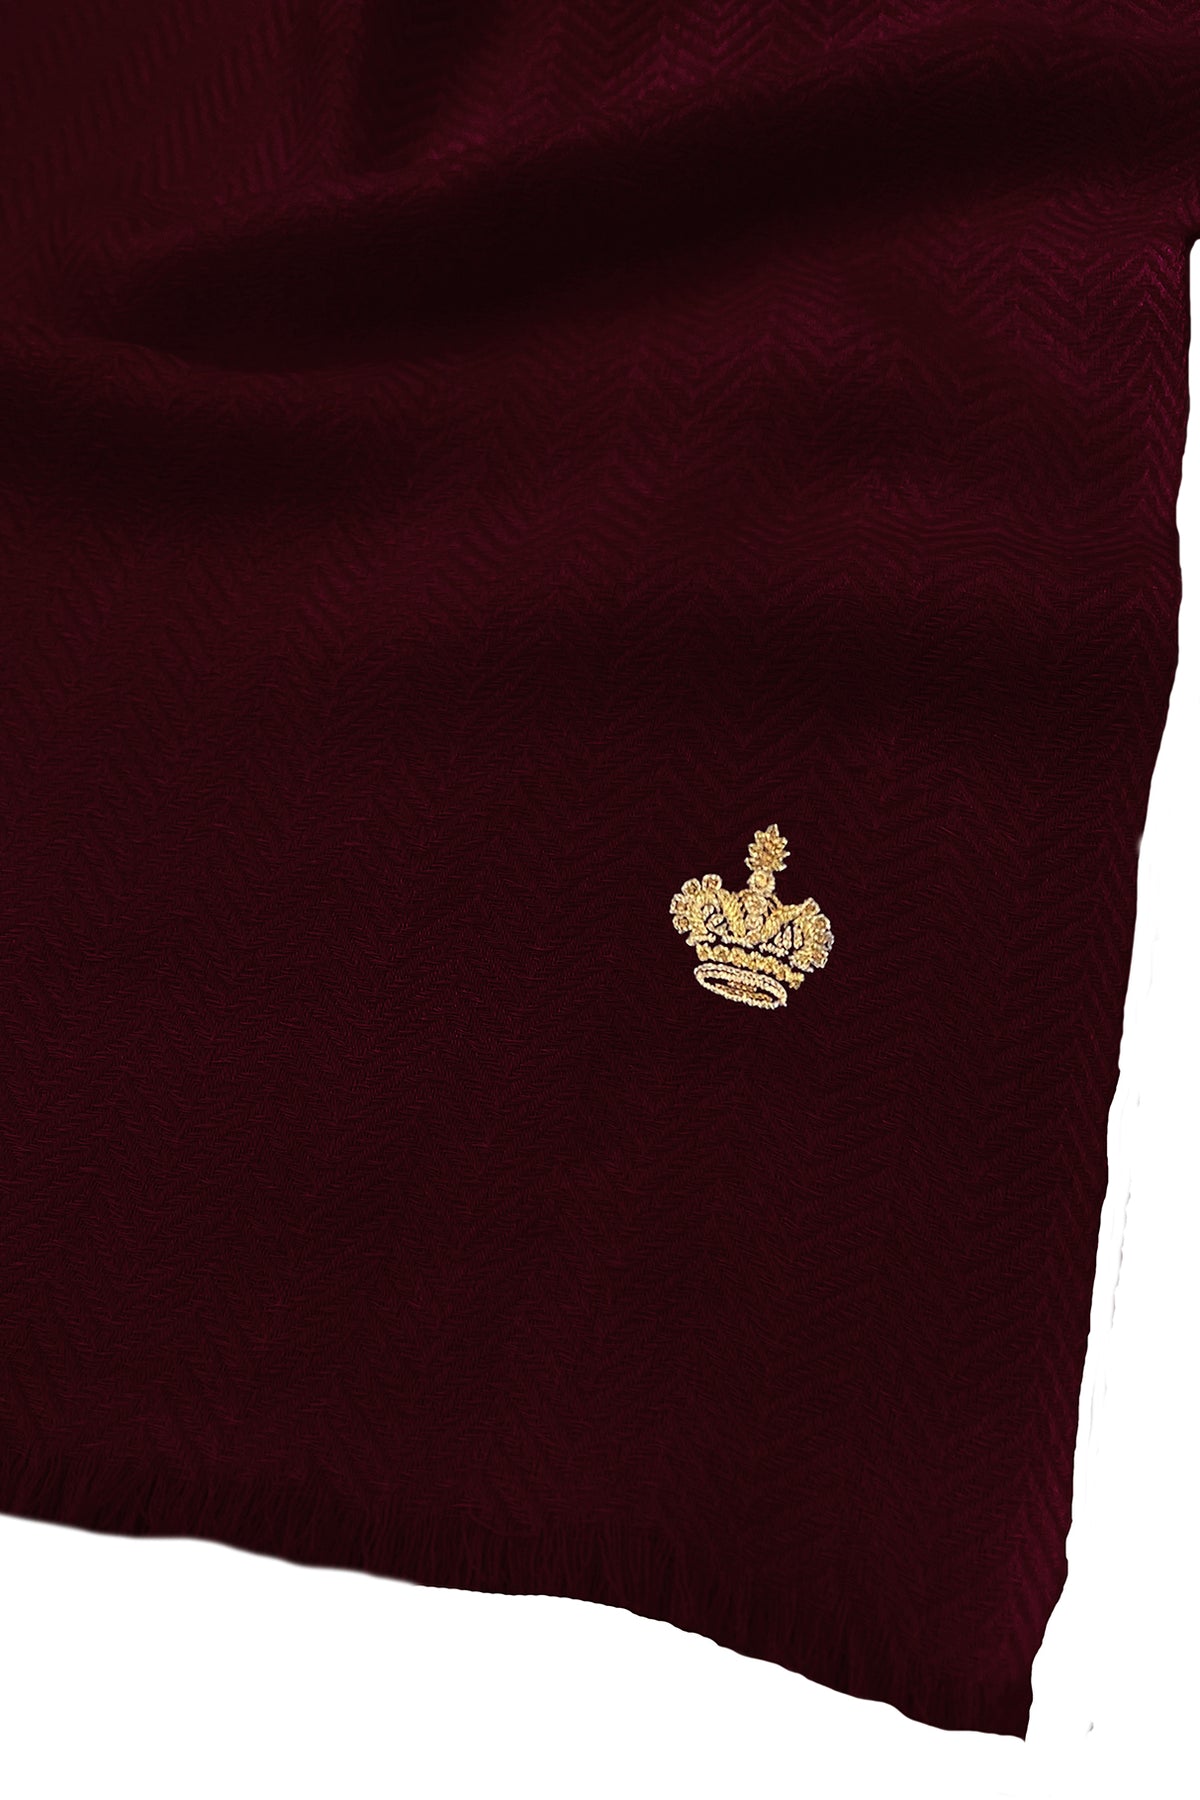 The Crown | Herringbone Cashmere Personalized Muffler